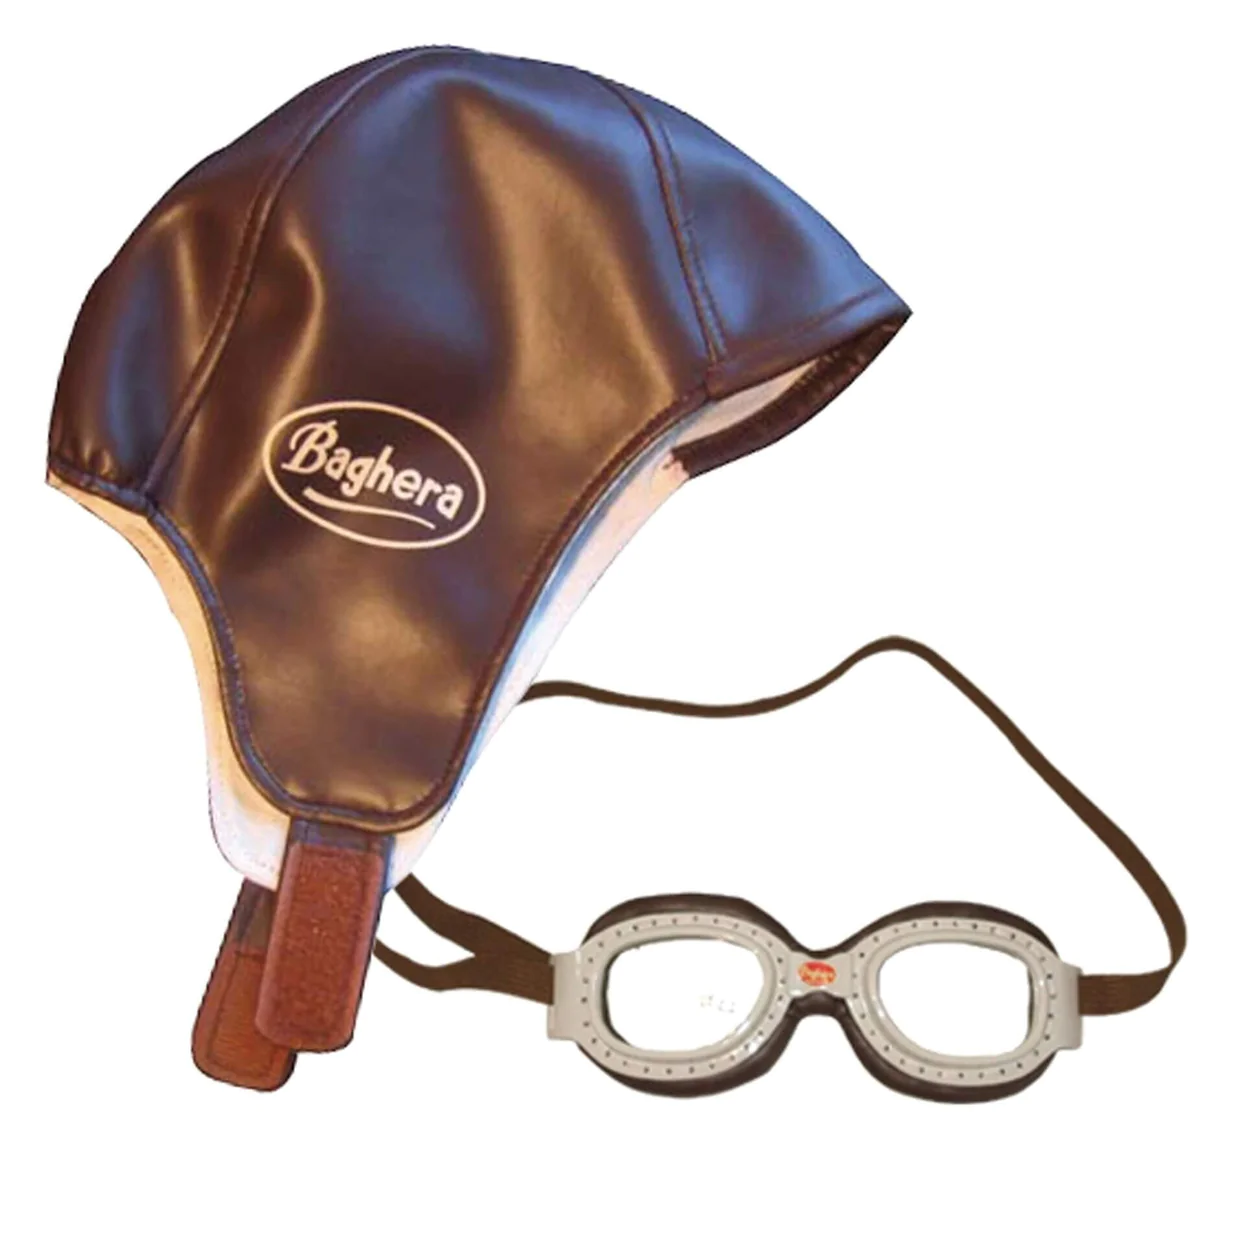 Baghera racing kit hat and goggles